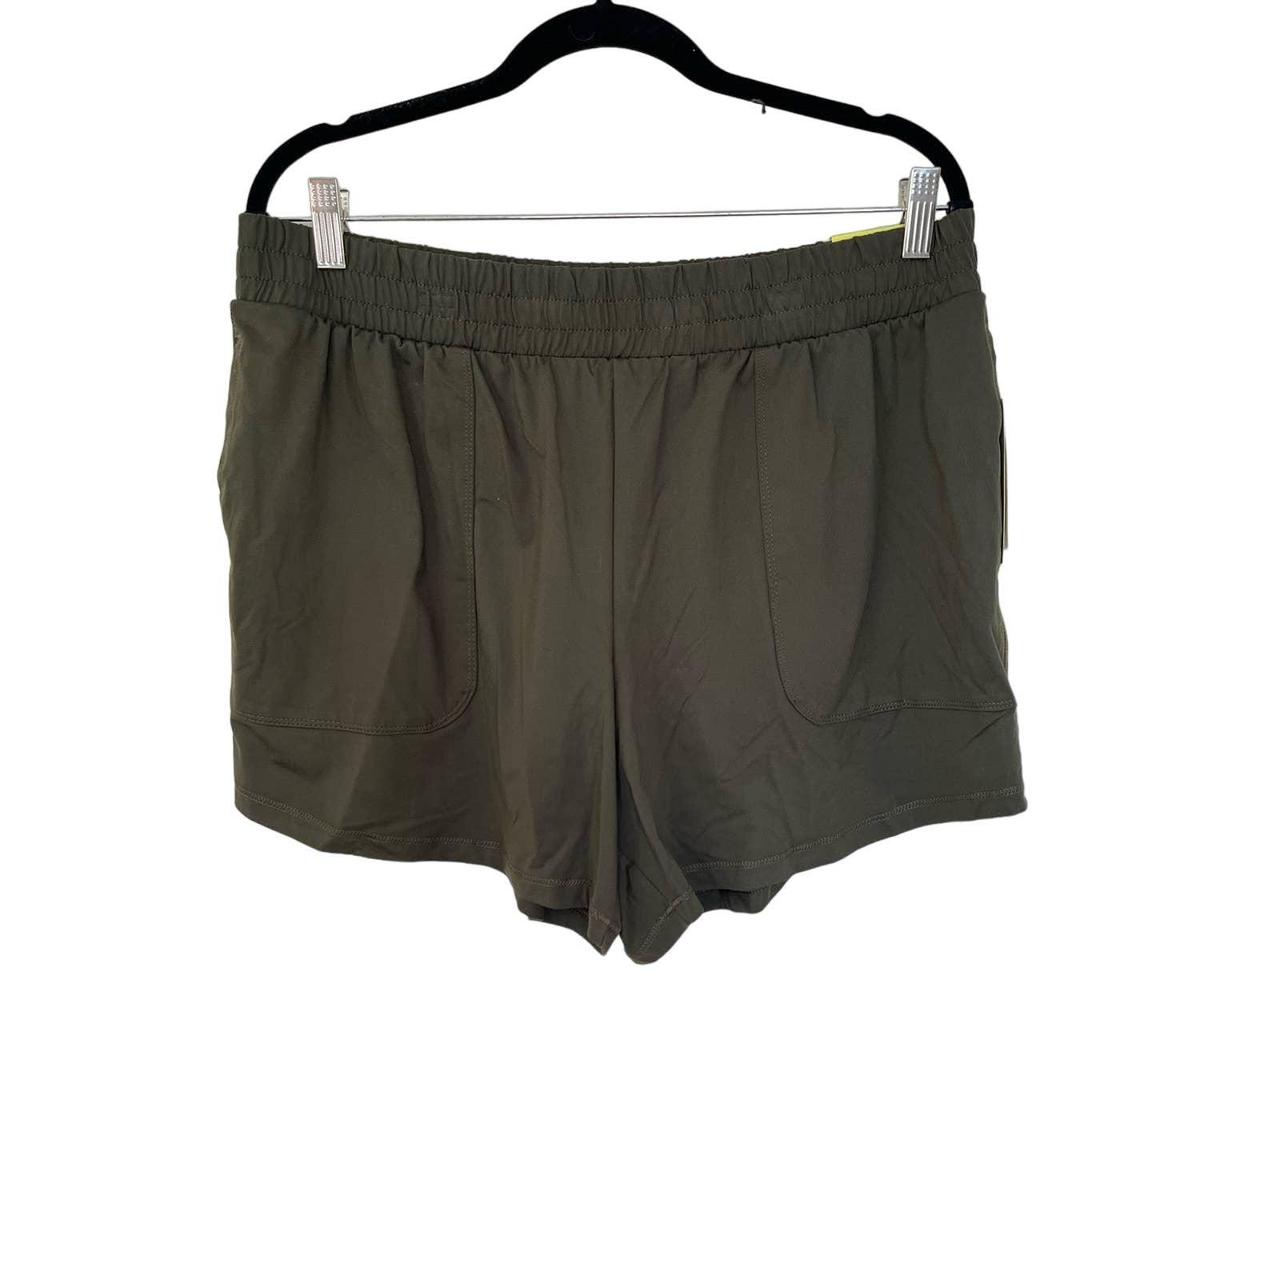 Cotton Knit Boxer Shorts : Target